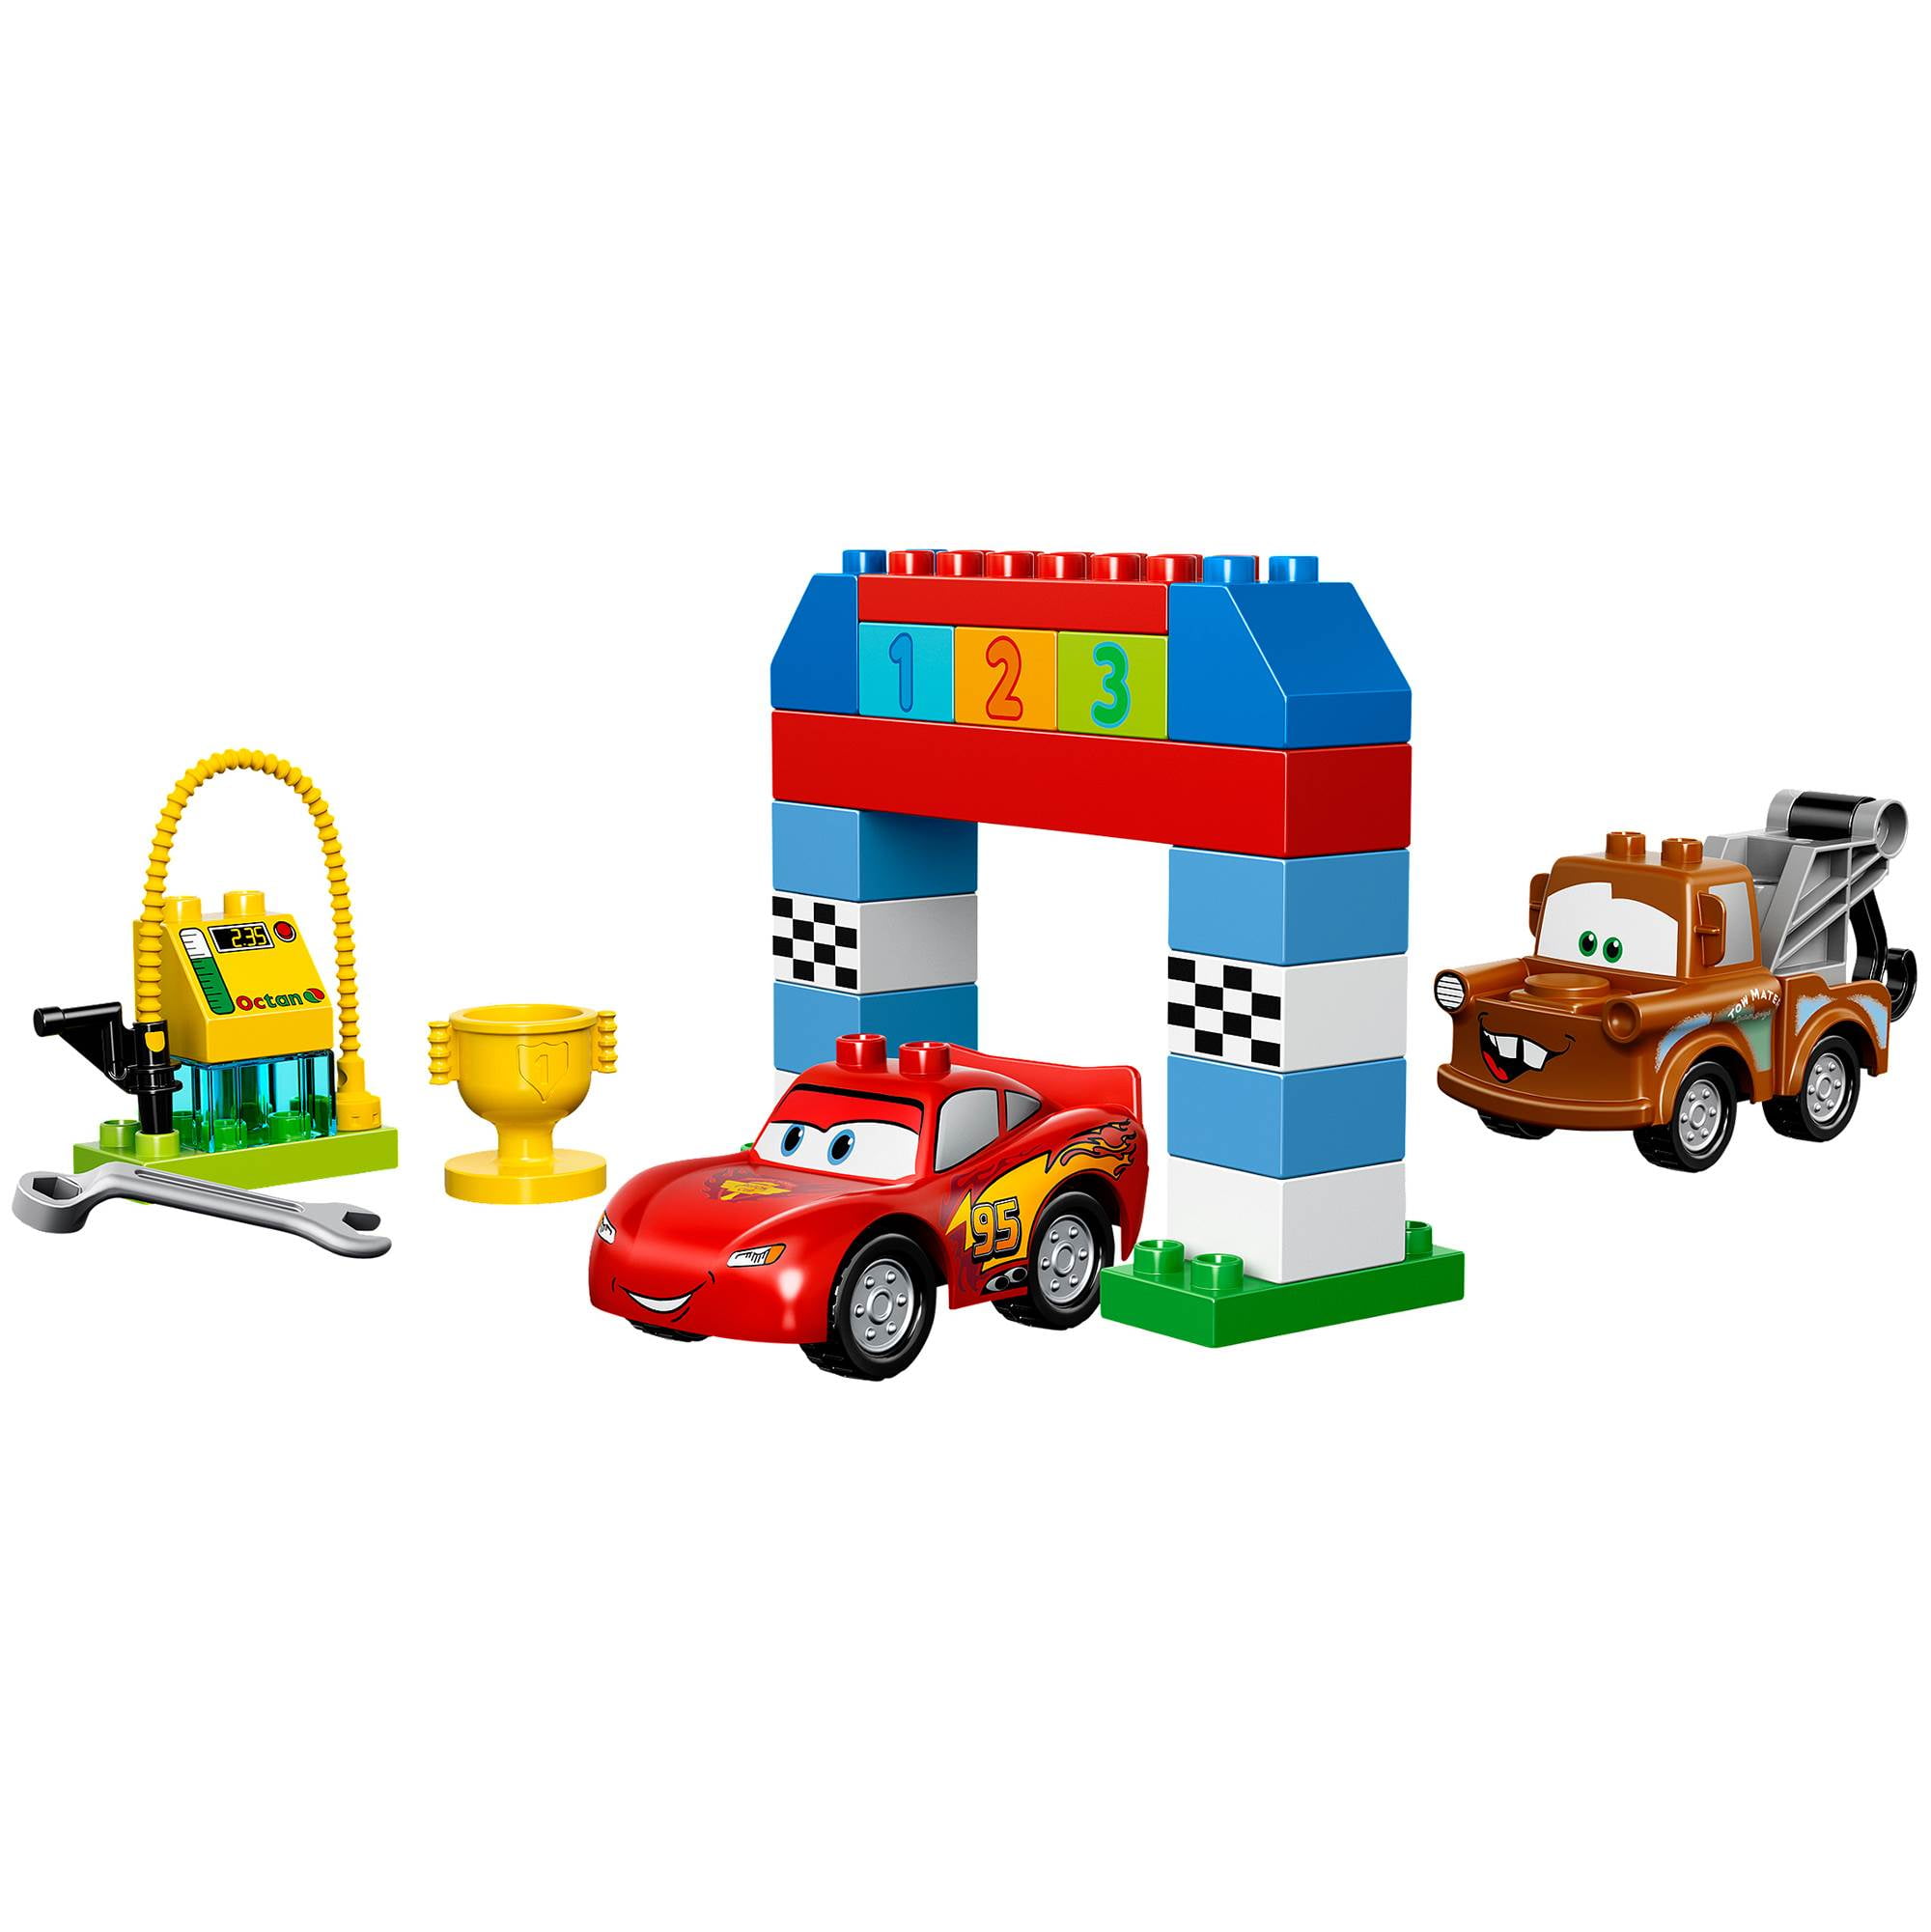 LEGO DUPLO Cars Disney Pixar Cars Classic Race Walmart